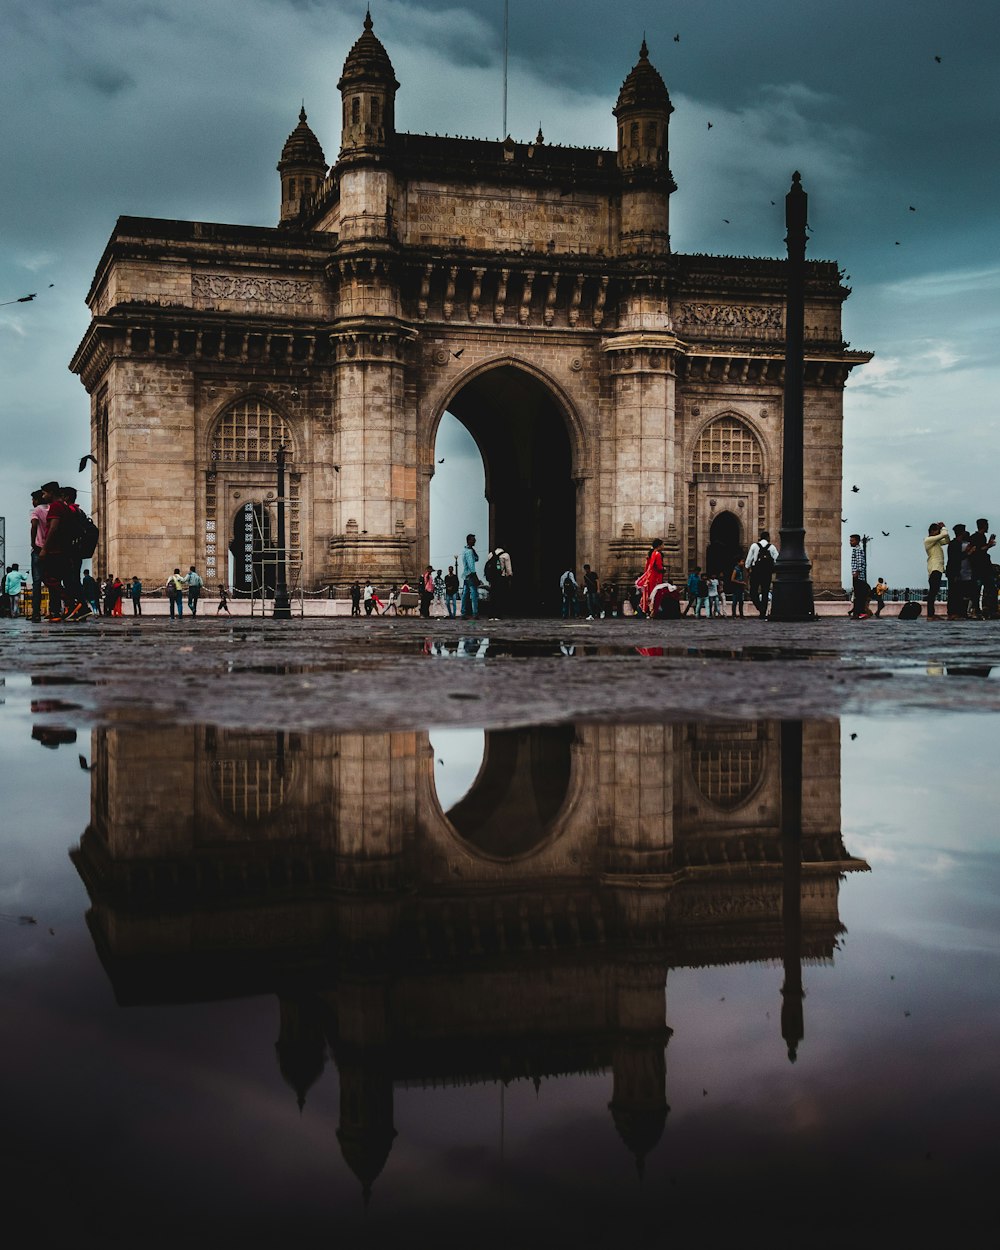 500+ Stunning Mumbai Pictures [HD] | Download Free Images on Unsplash